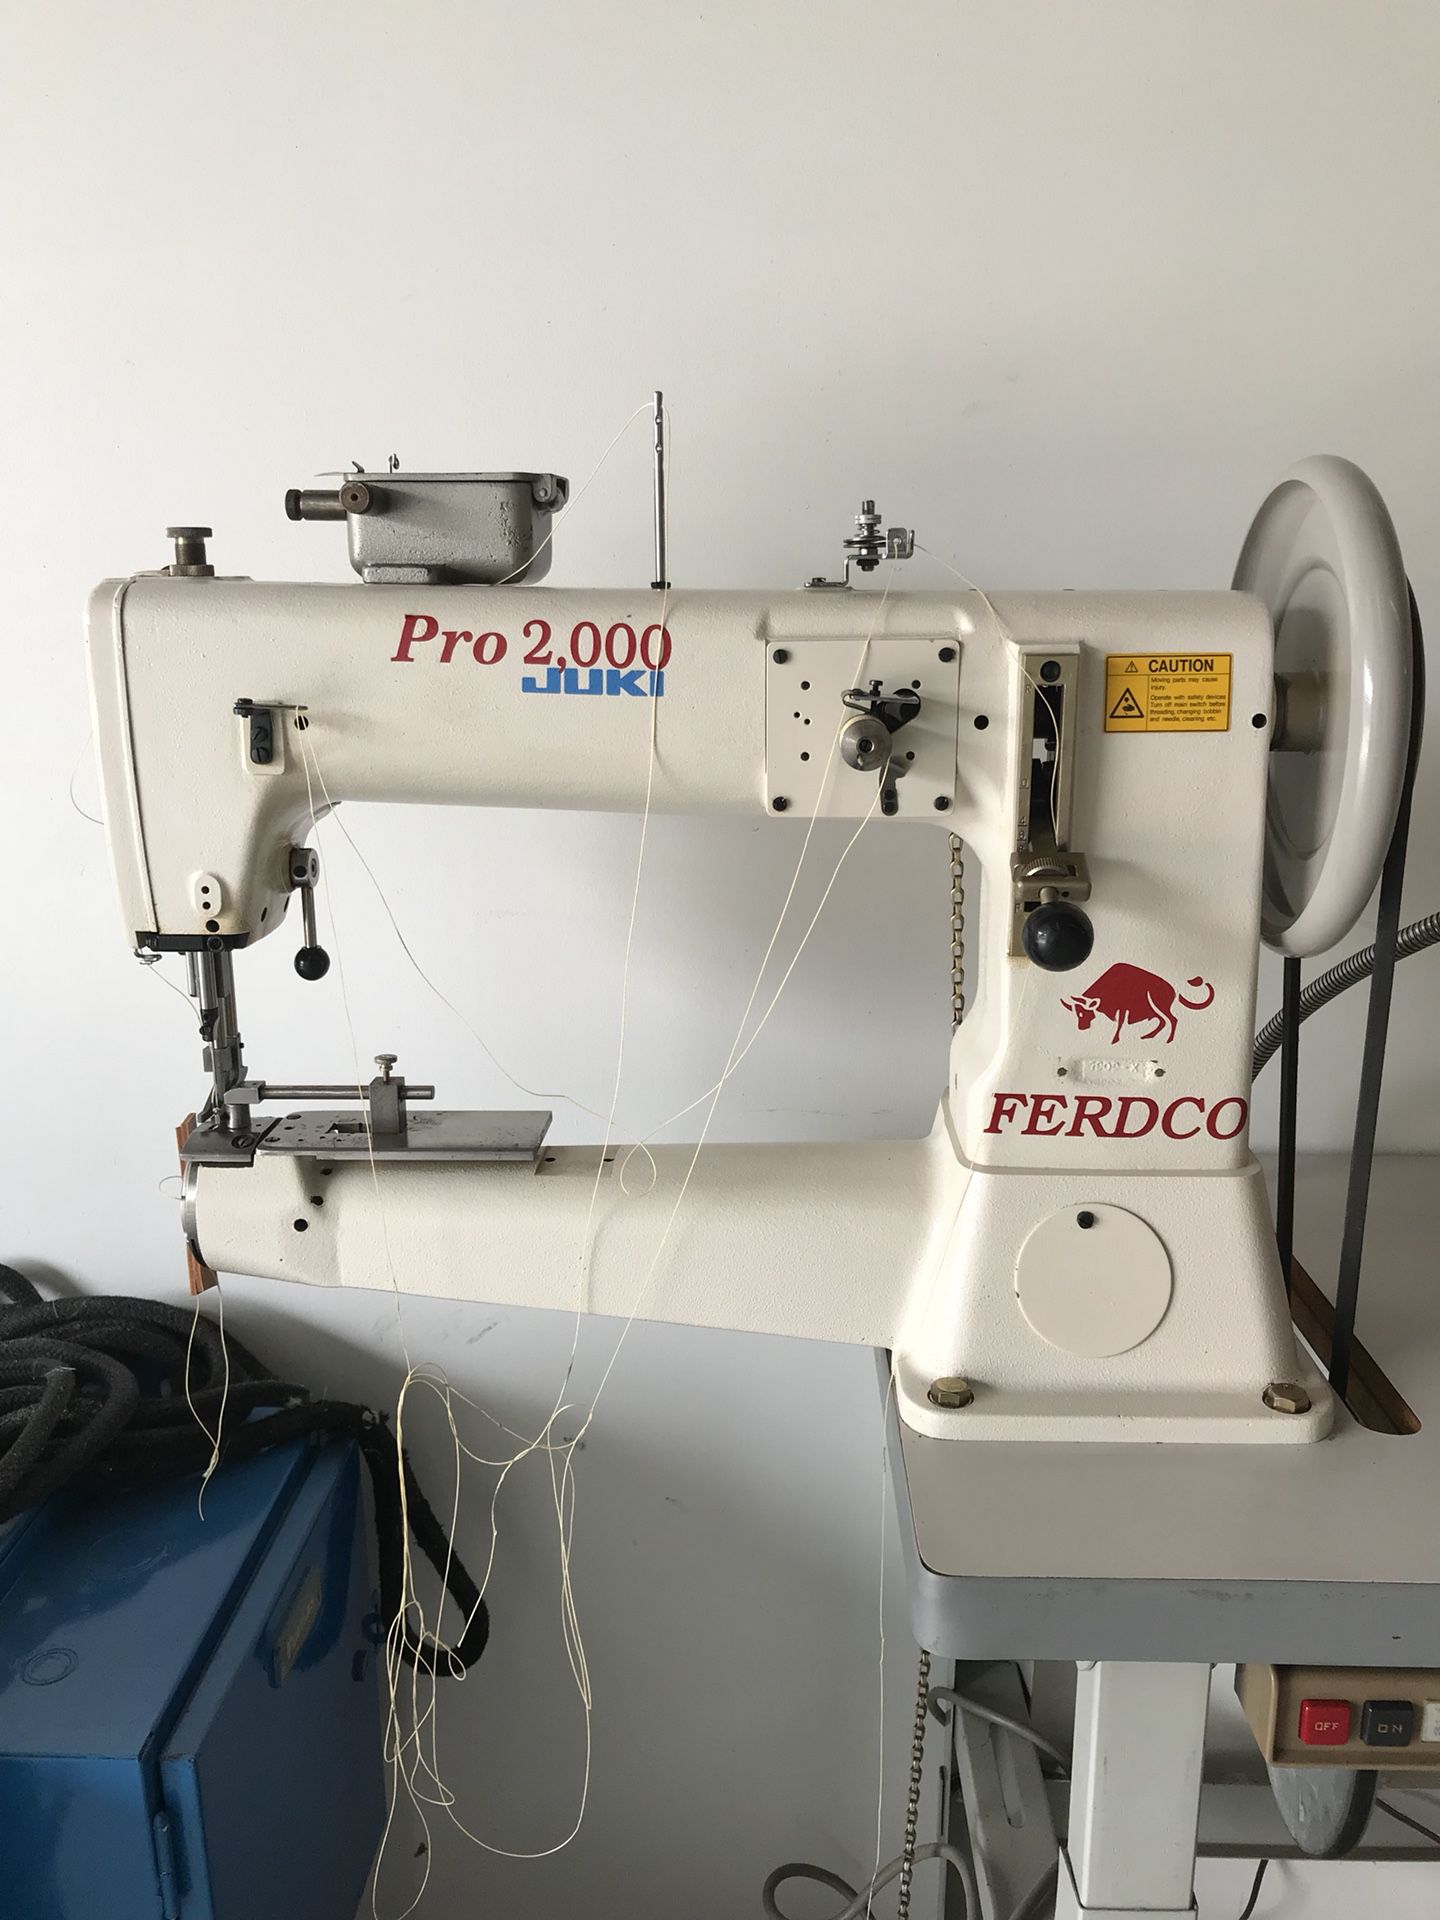 Juki Pro 2,000 Ferdco Leather Sewing machine